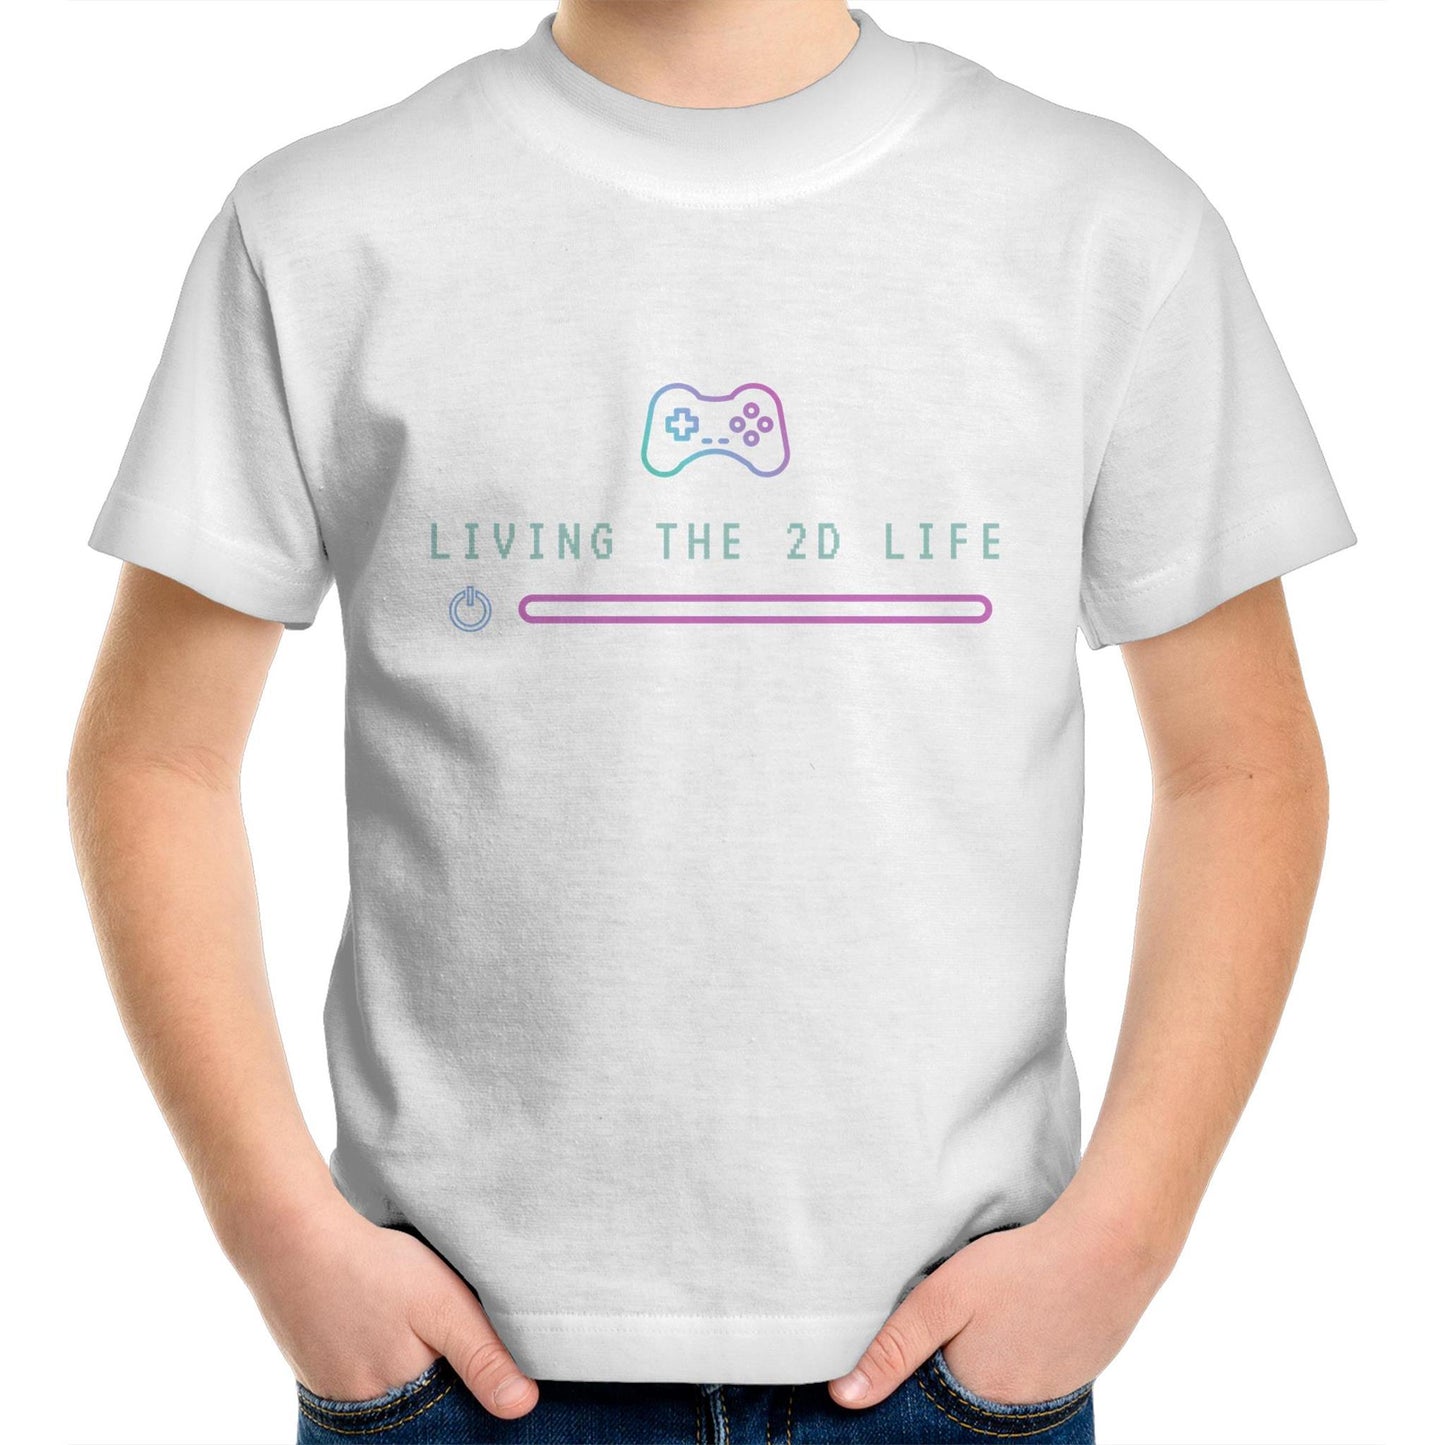 Living The 2D Life - Kids Youth Crew T-Shirt White Kids Youth T-shirt Games Tech